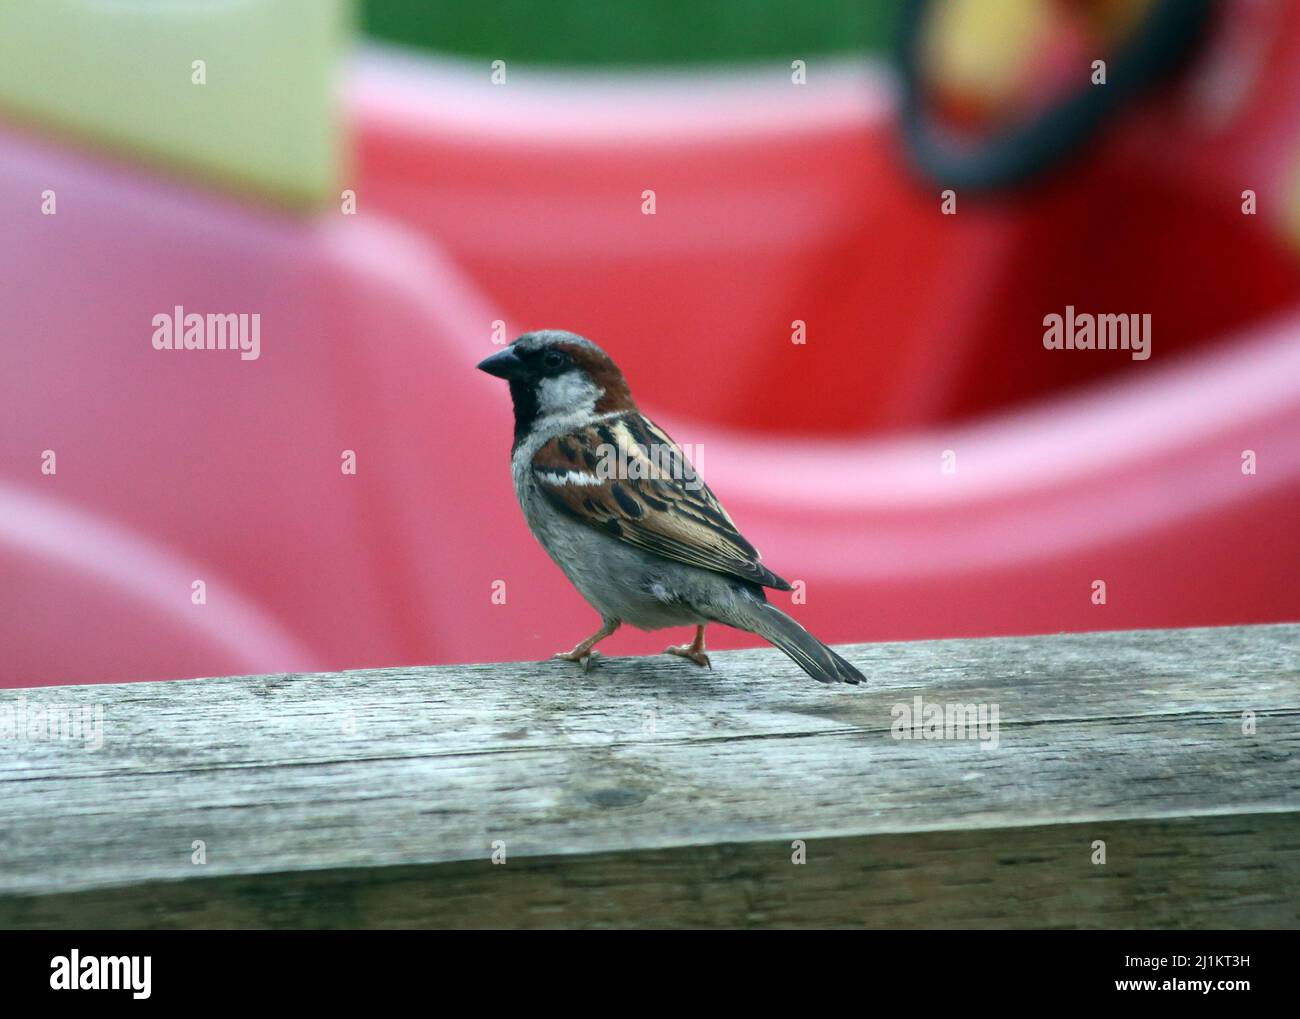 Sparrow stood on wood in garden Stock Photo